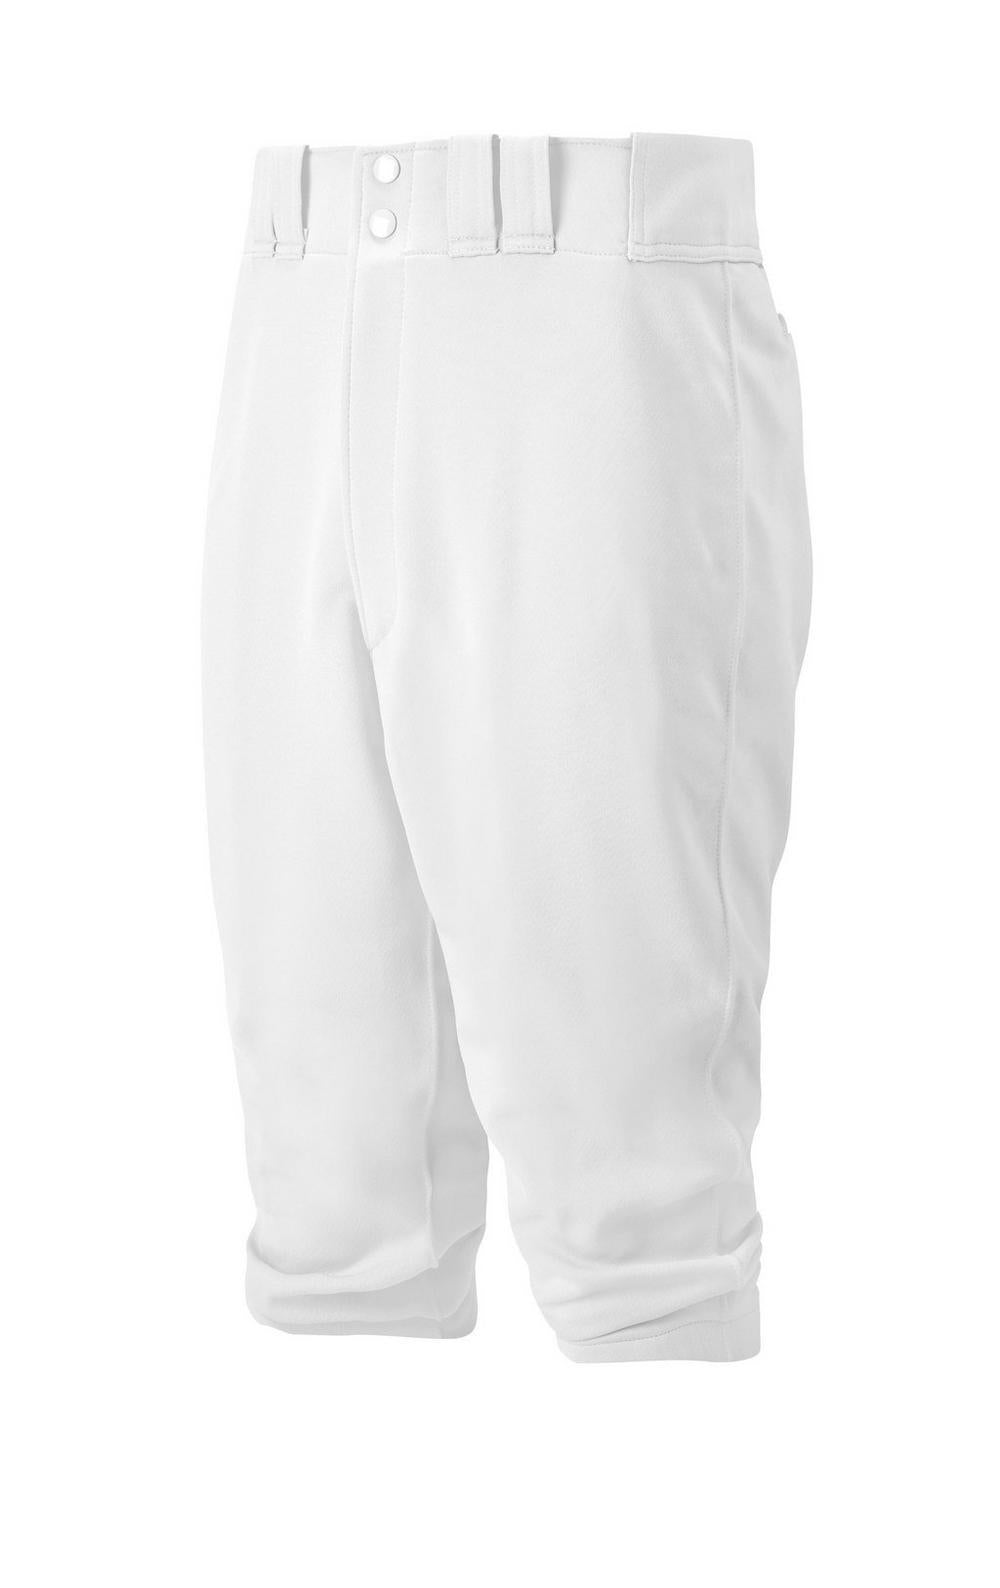 Mizuno Premier Adult Short Pant - White (350280)